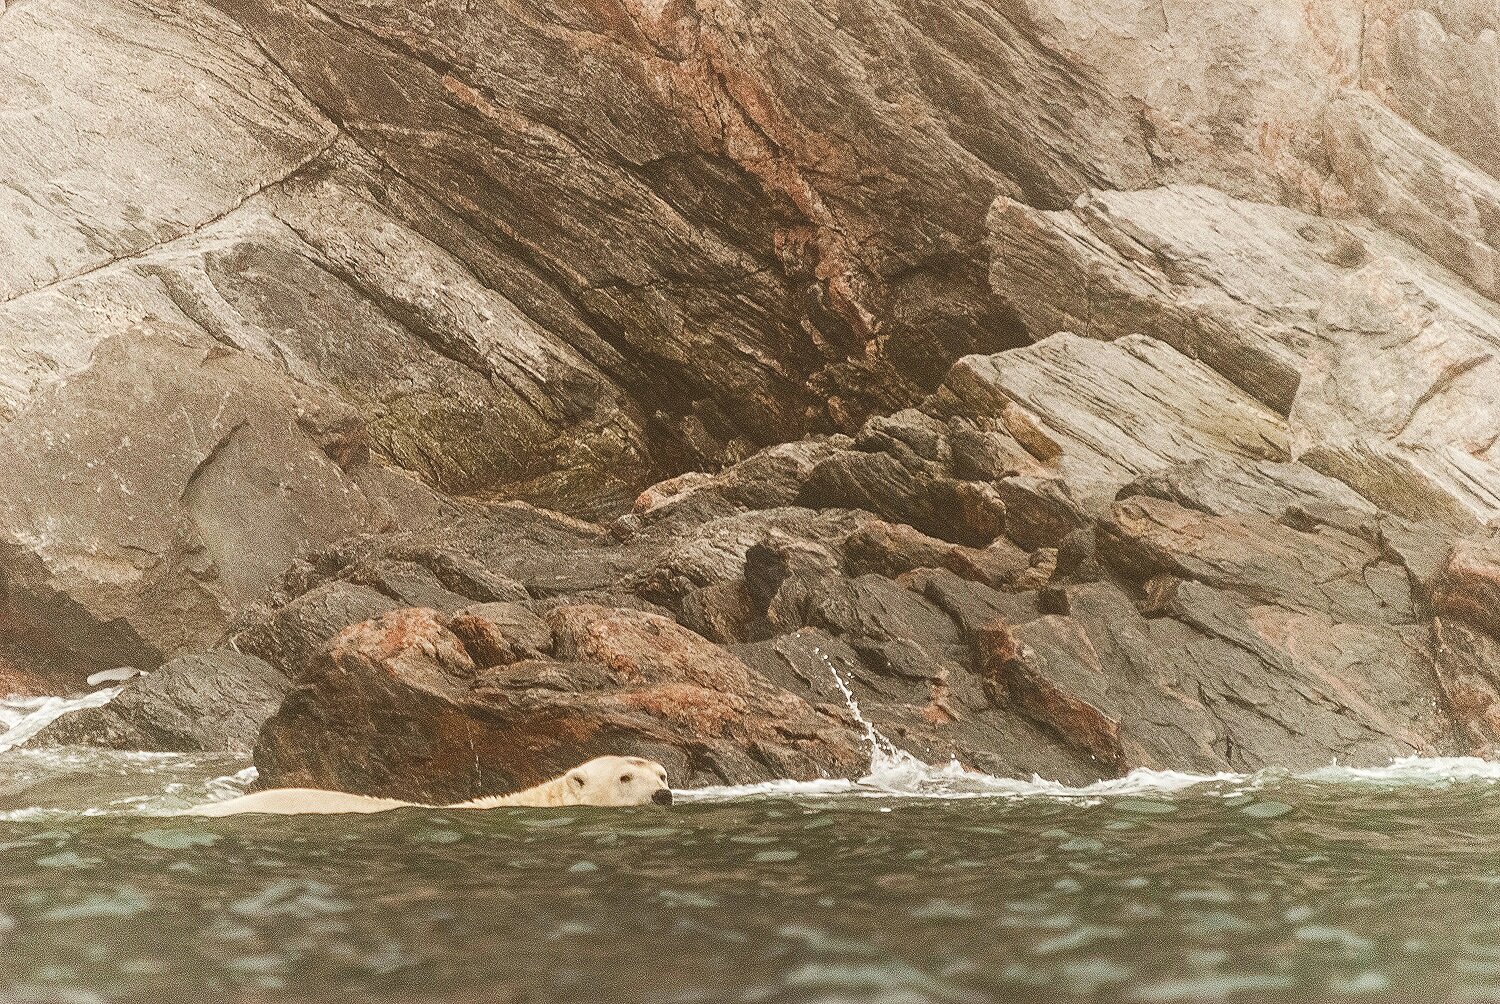 Stranded Polar Bear Swimming Along The Shoreline 